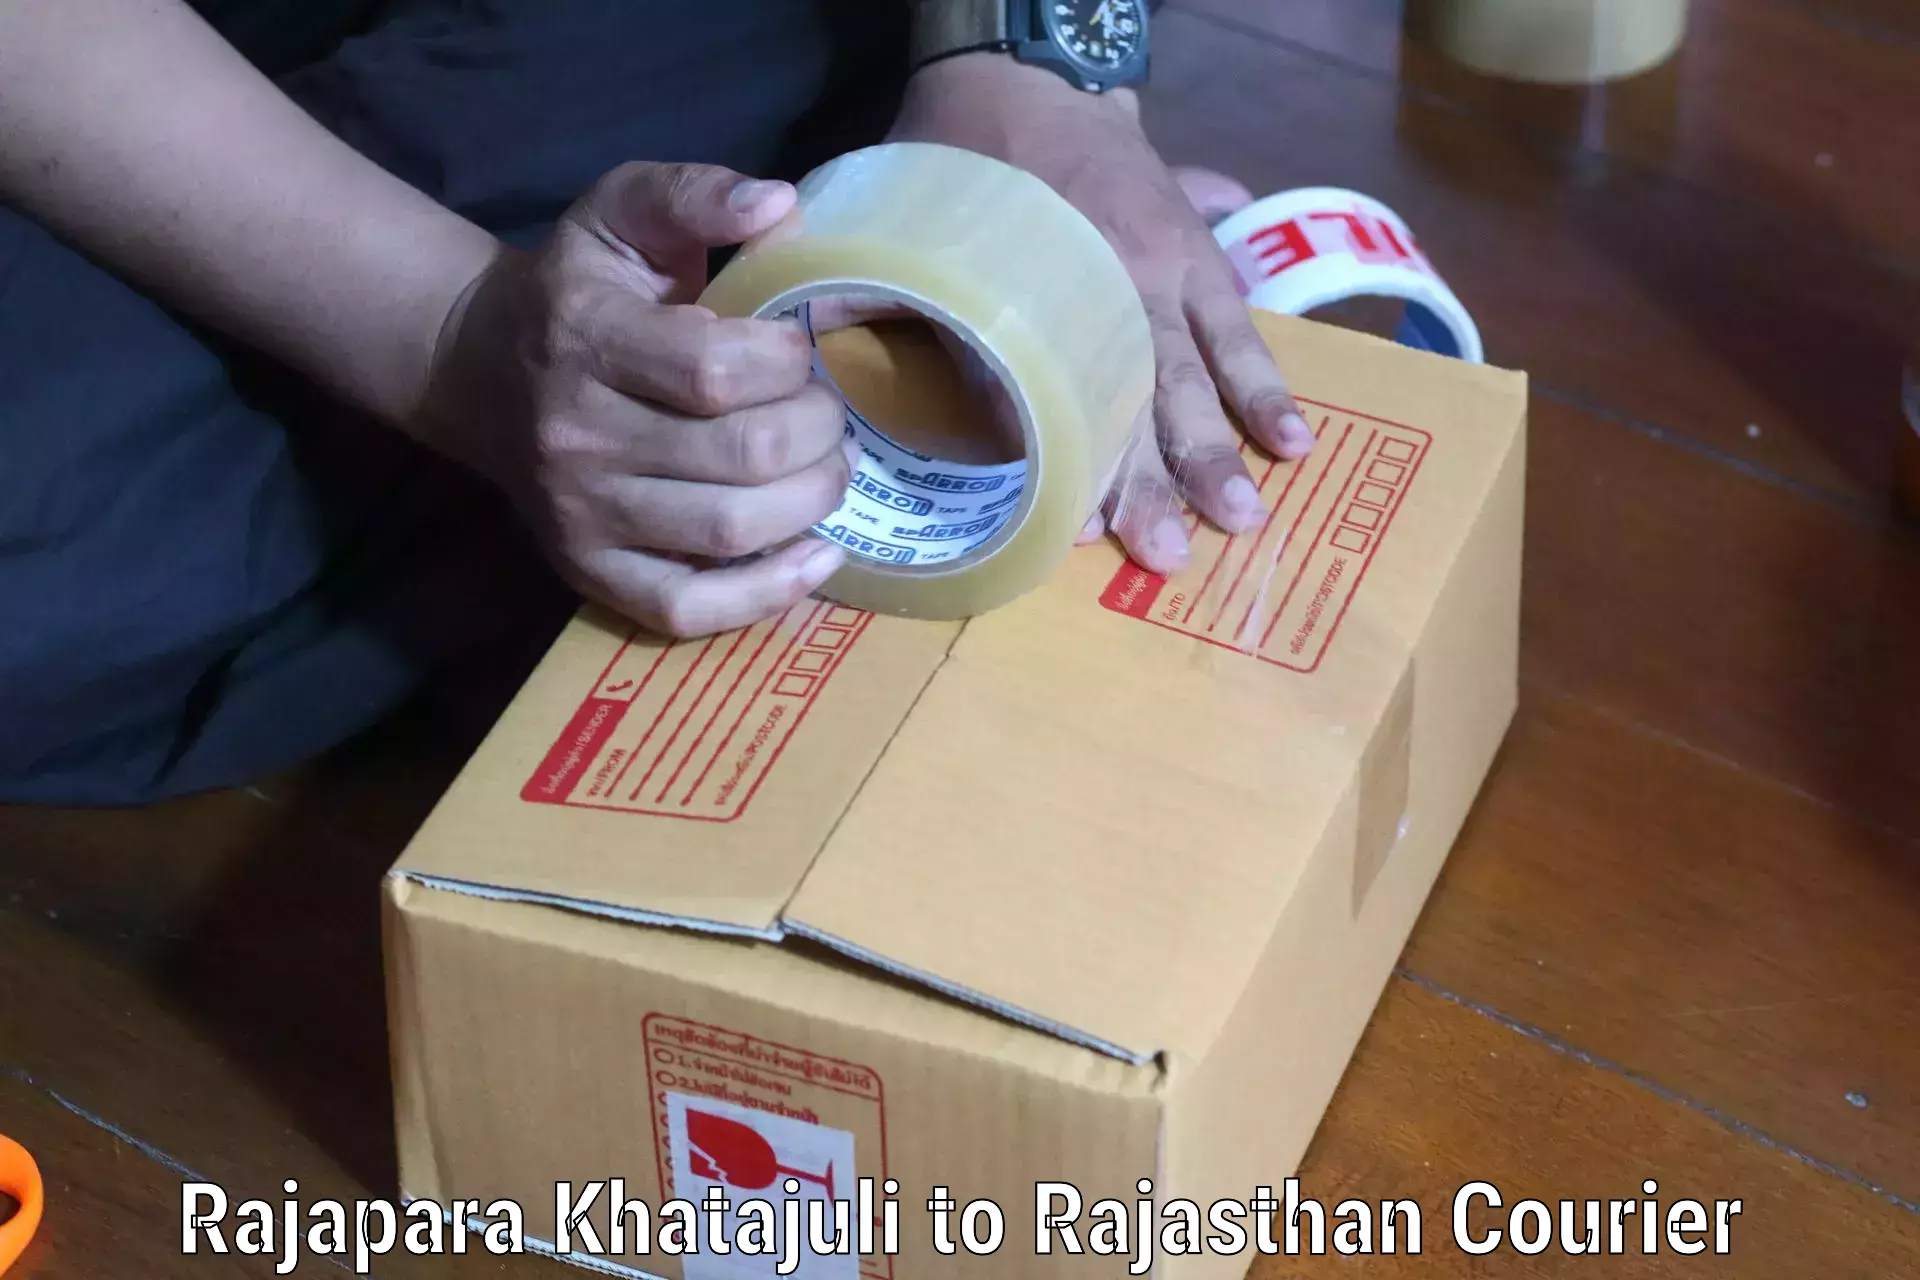 Custom courier packaging Rajapara Khatajuli to Khanpur